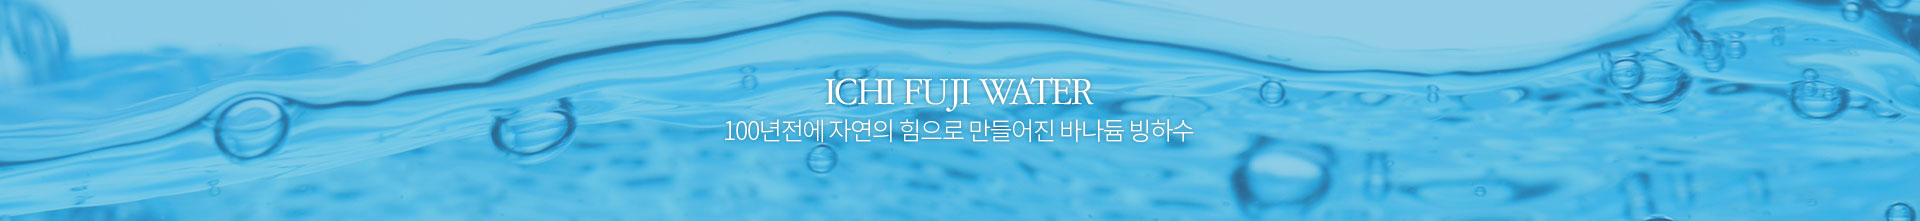 ichifuji water 100년전에 자연의 힘으로 만들어진 바나듐 빙하수